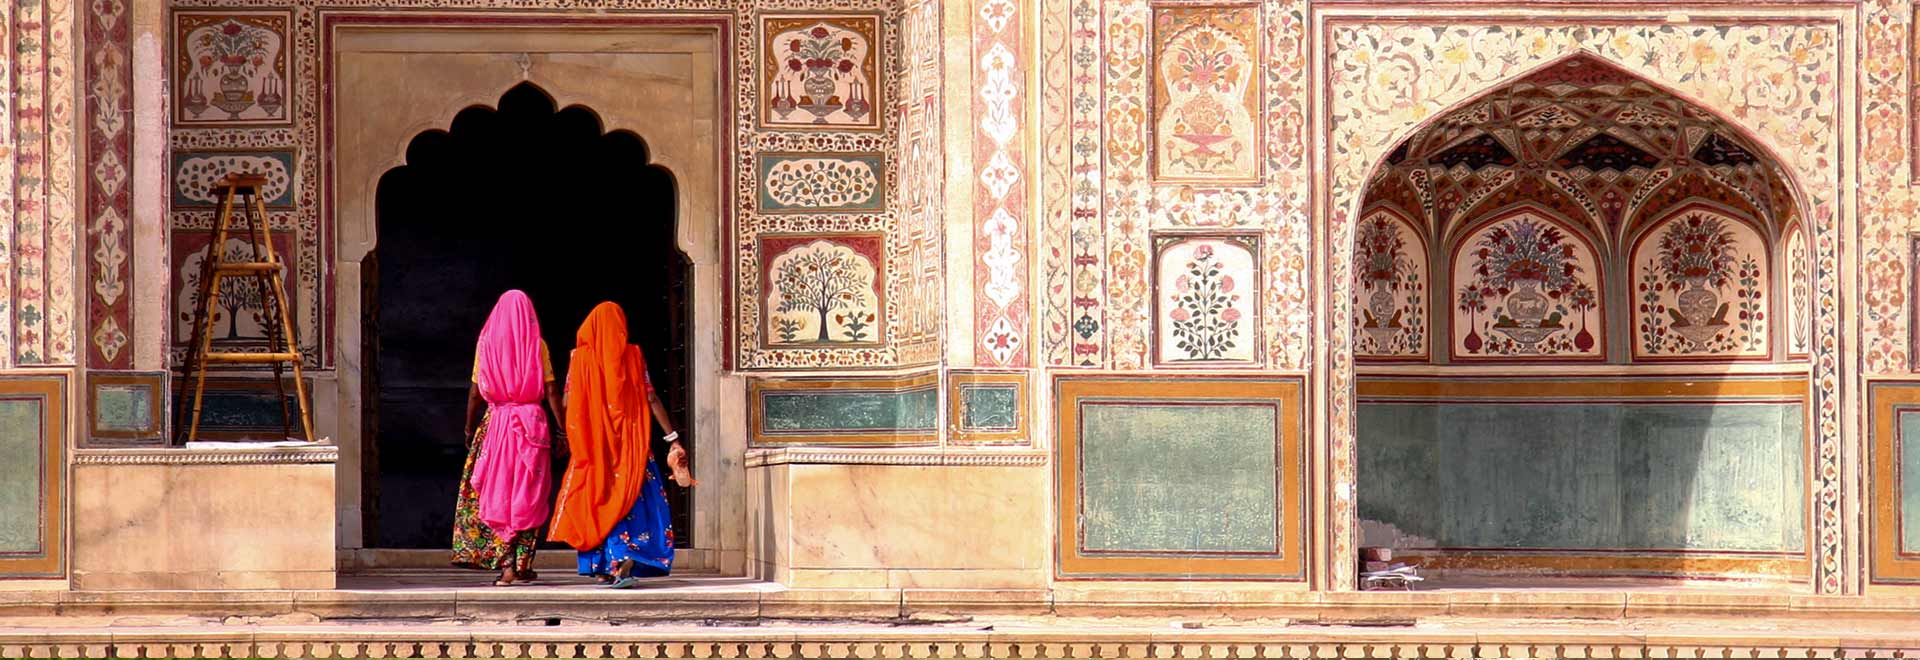 Asia Signature India Taj Mahal Jaipur Amber Fort MH